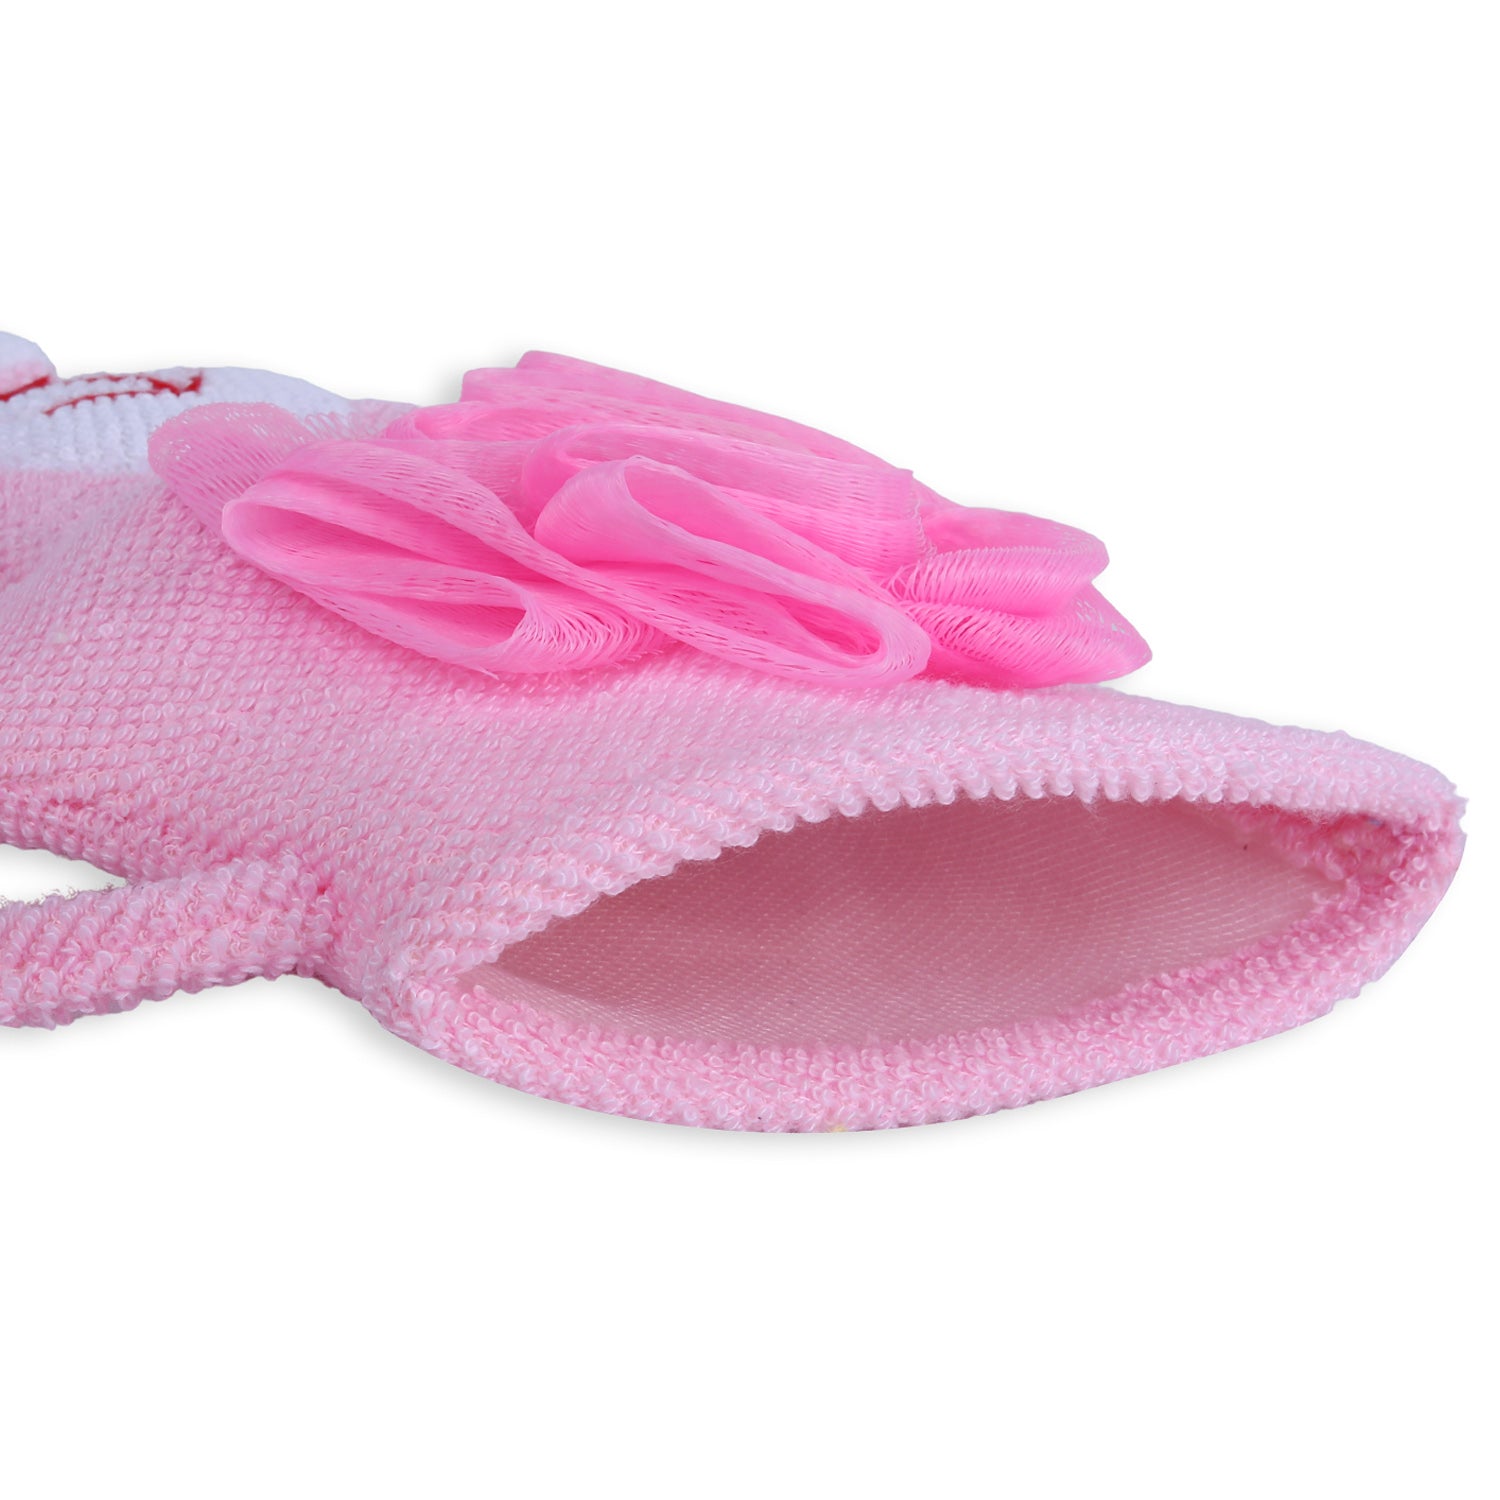 Baby Moo Naughty Rabbit Bath Time Fun Hand Puppet Loofah Bath Glove - Pink